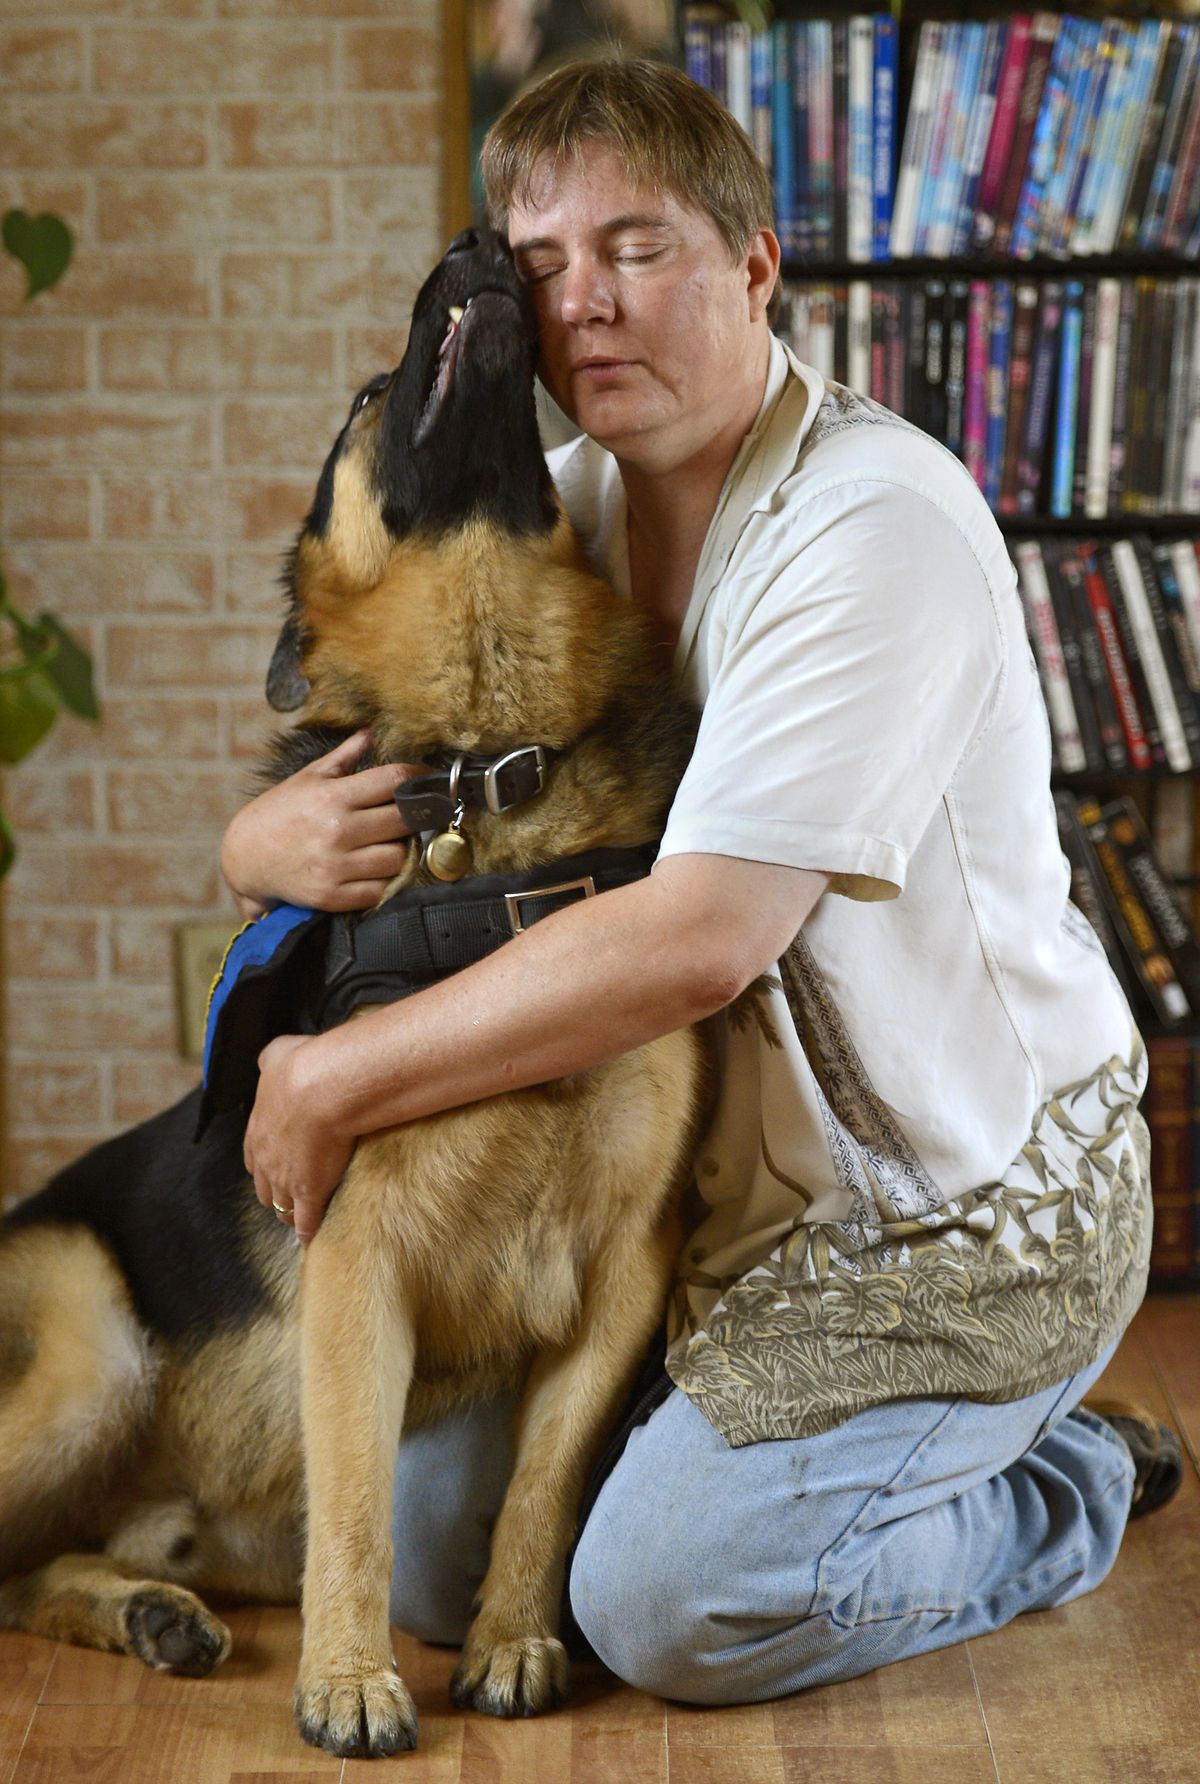 Charlie Bales went online to find Max, a German shepherd service dog.